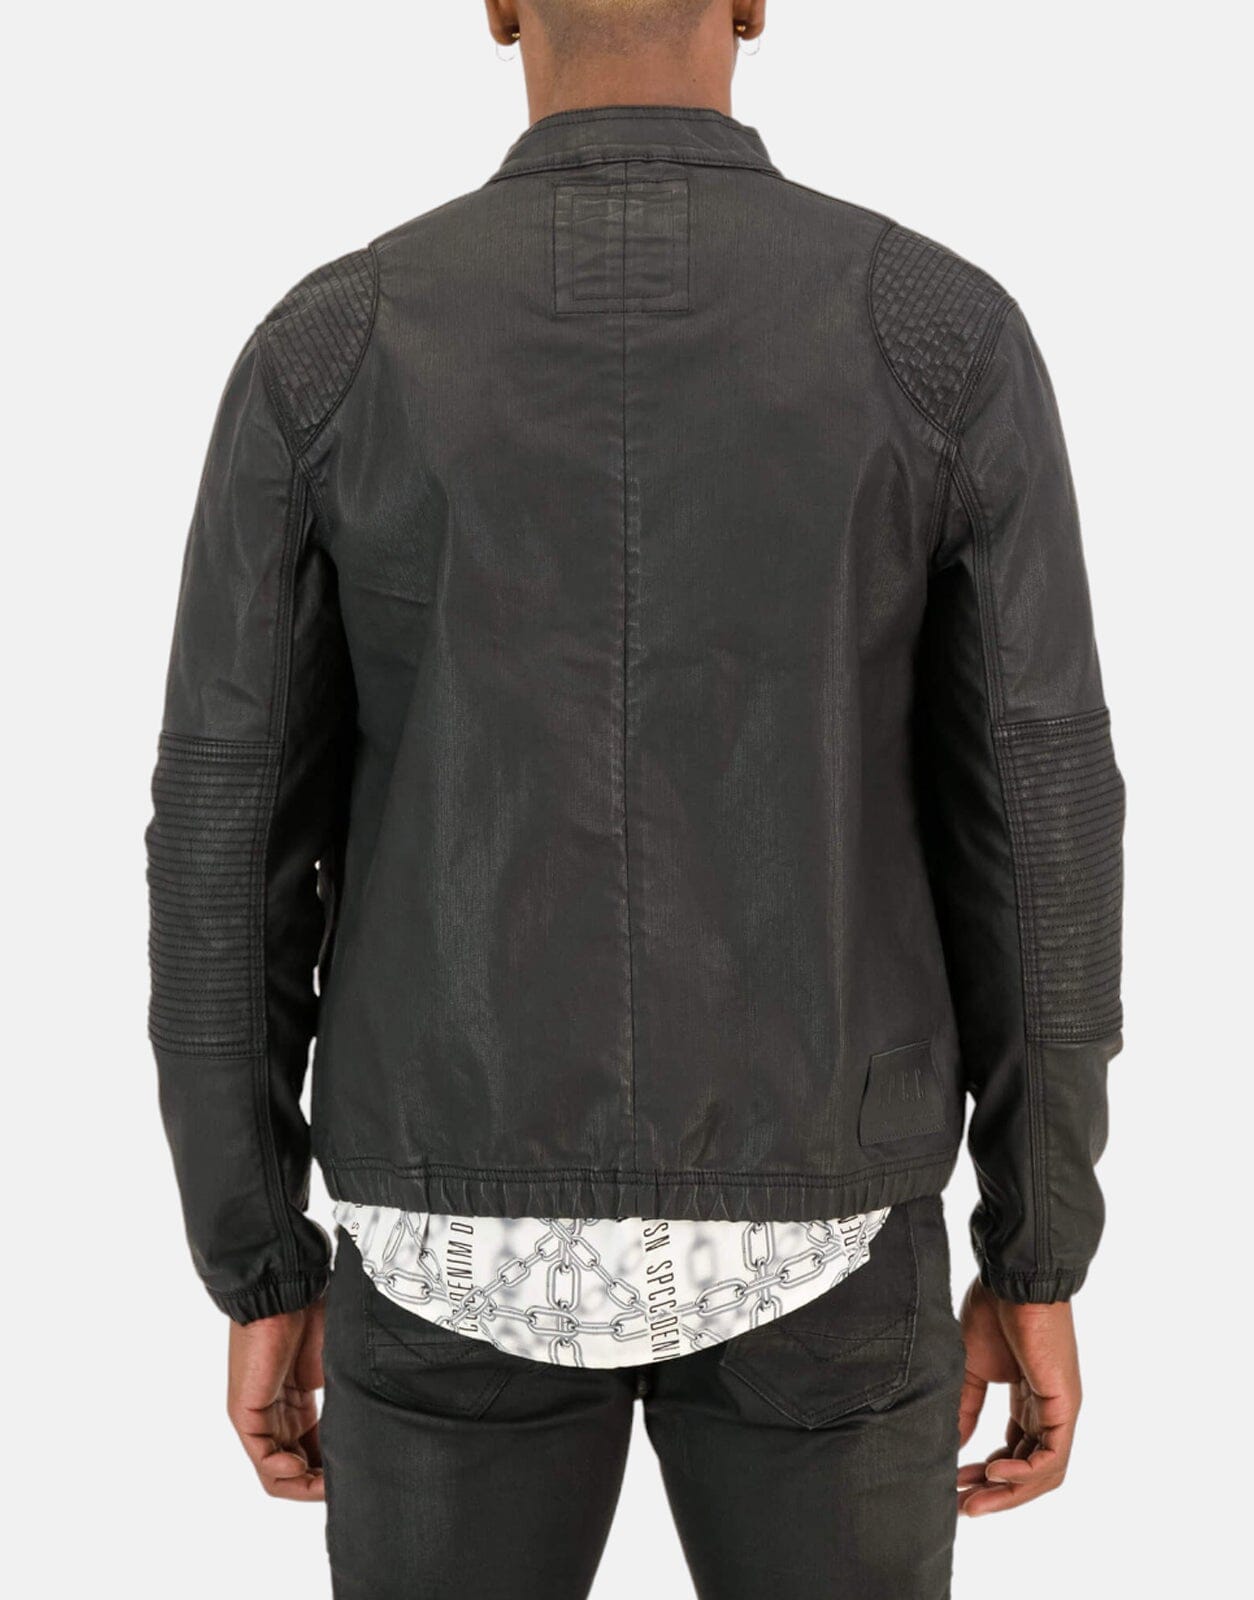 SPCC Walton Black Jacket - Subwear